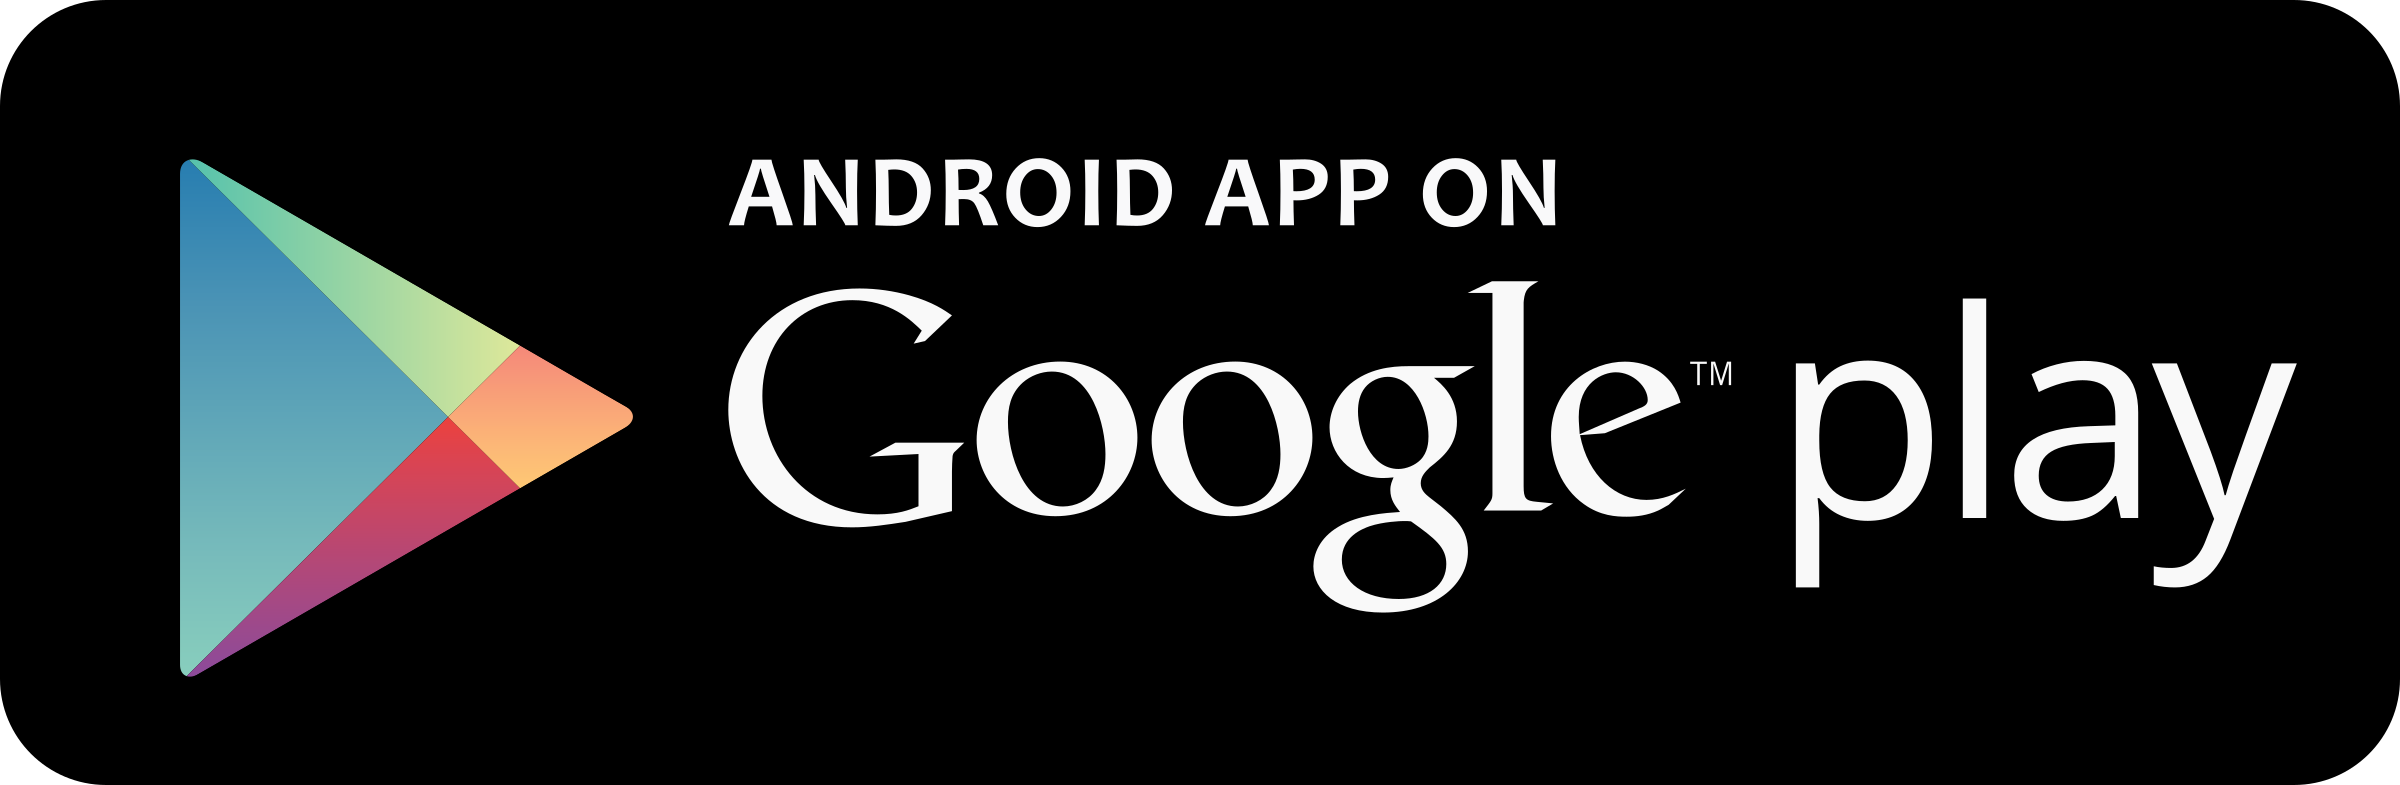 College Physics App (Google Play Store)